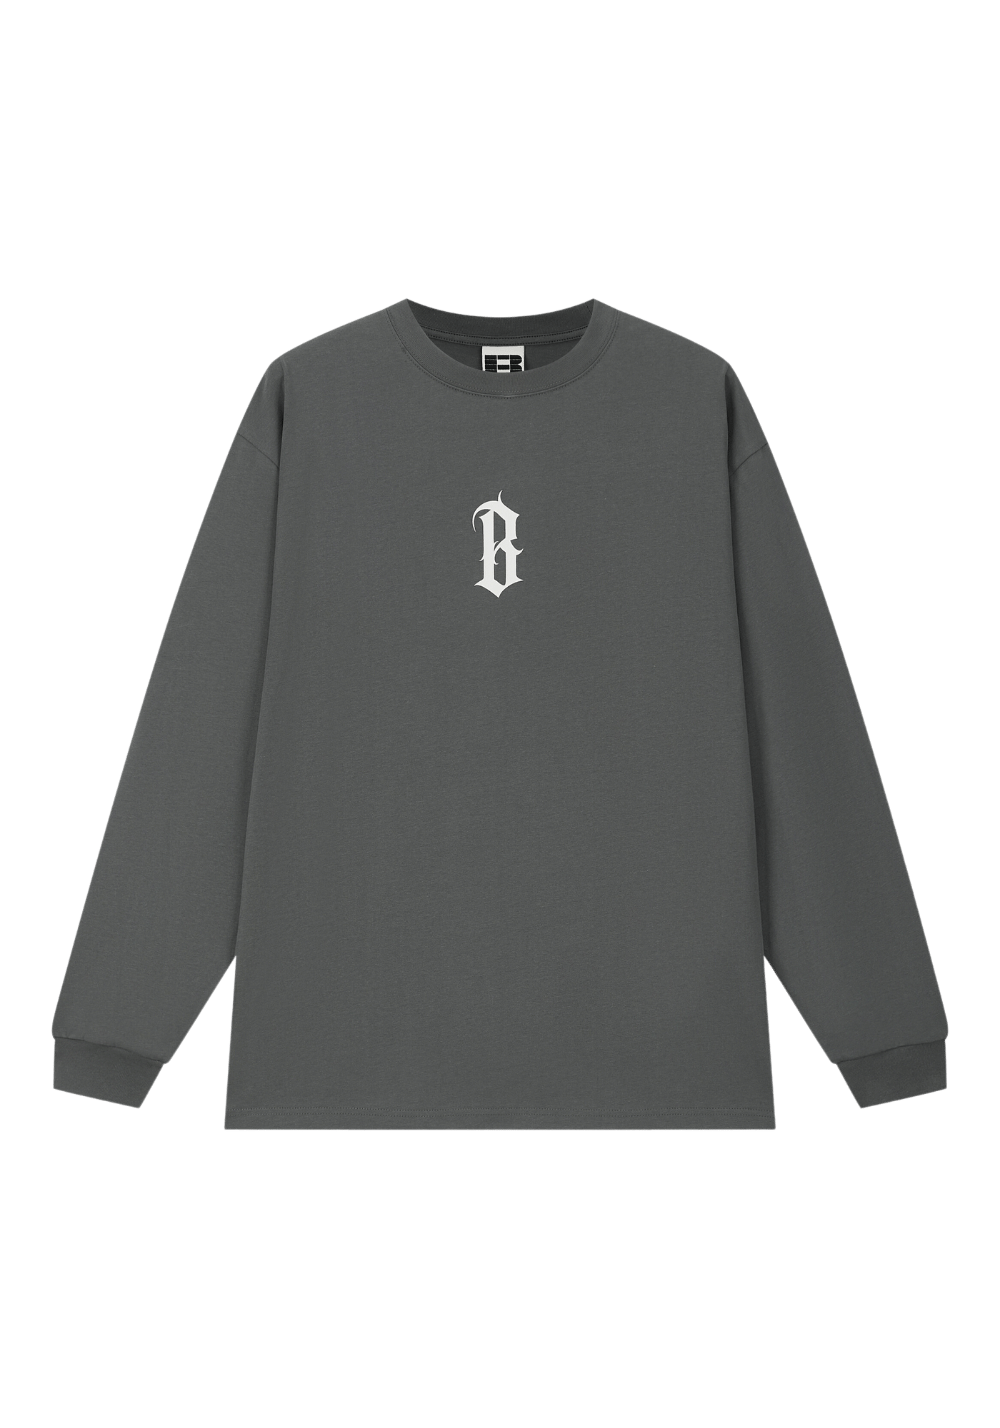 Gothic Font classic Logo Sweatshirt - PSYLOS 1, Gothic Font classic Logo Sweatshirt, Sweatshirts, Boneless, PSYLOS 1